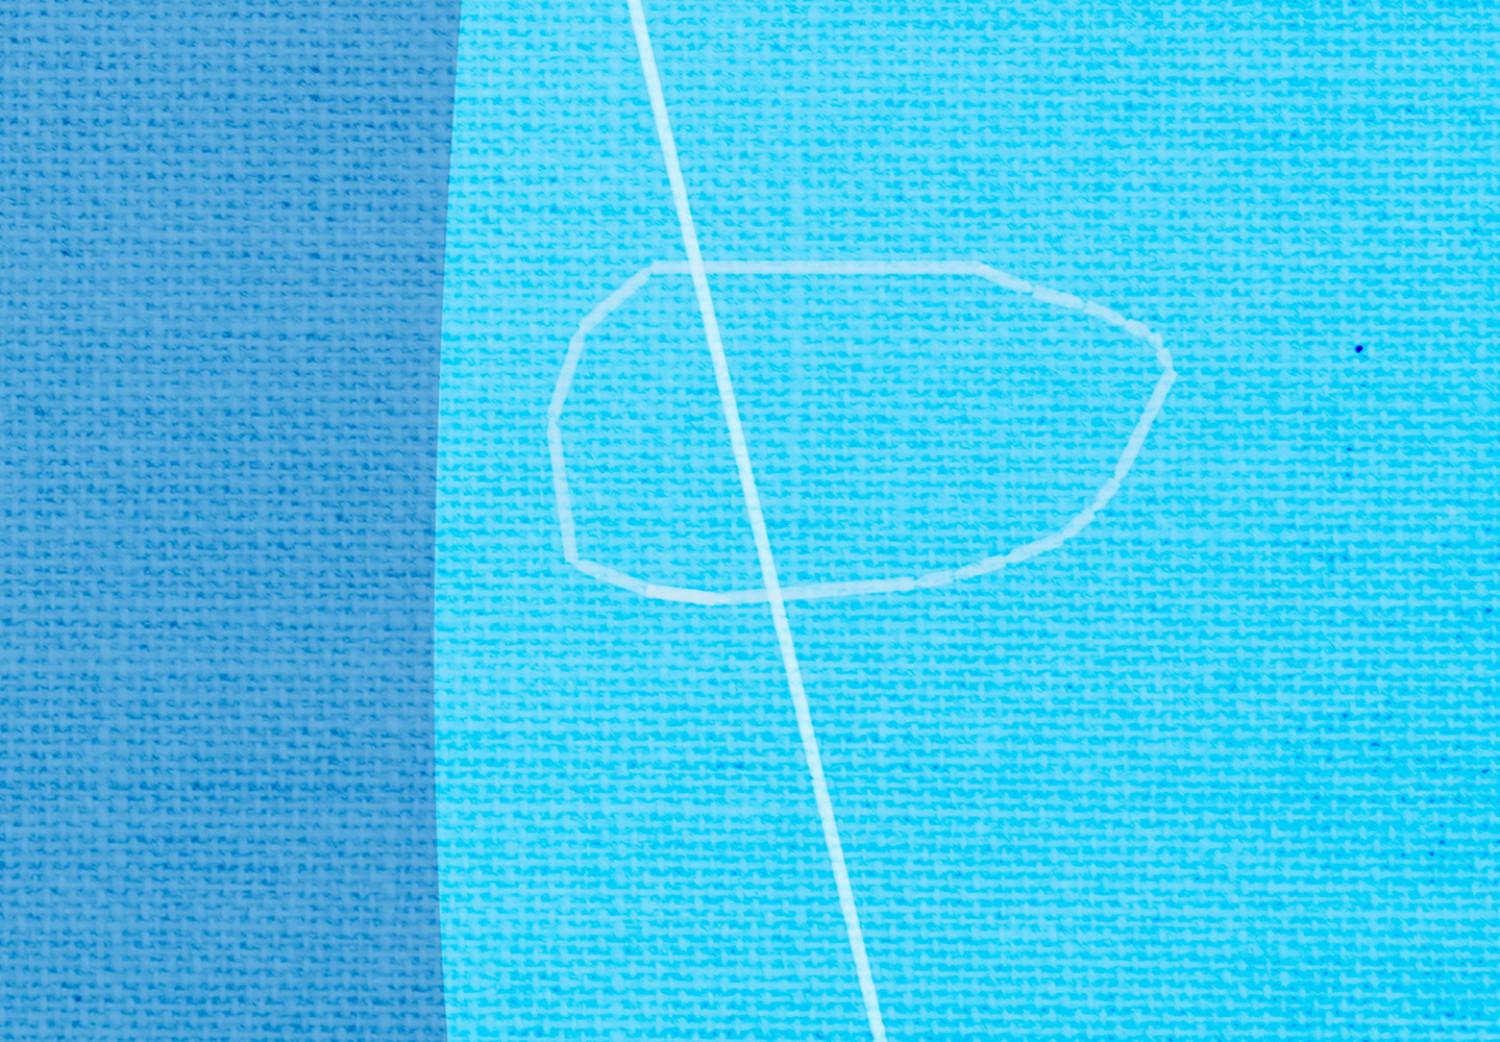 Cuadro decorativo Polígono blanco sobre fondo azul - abstracción geométrica moderna